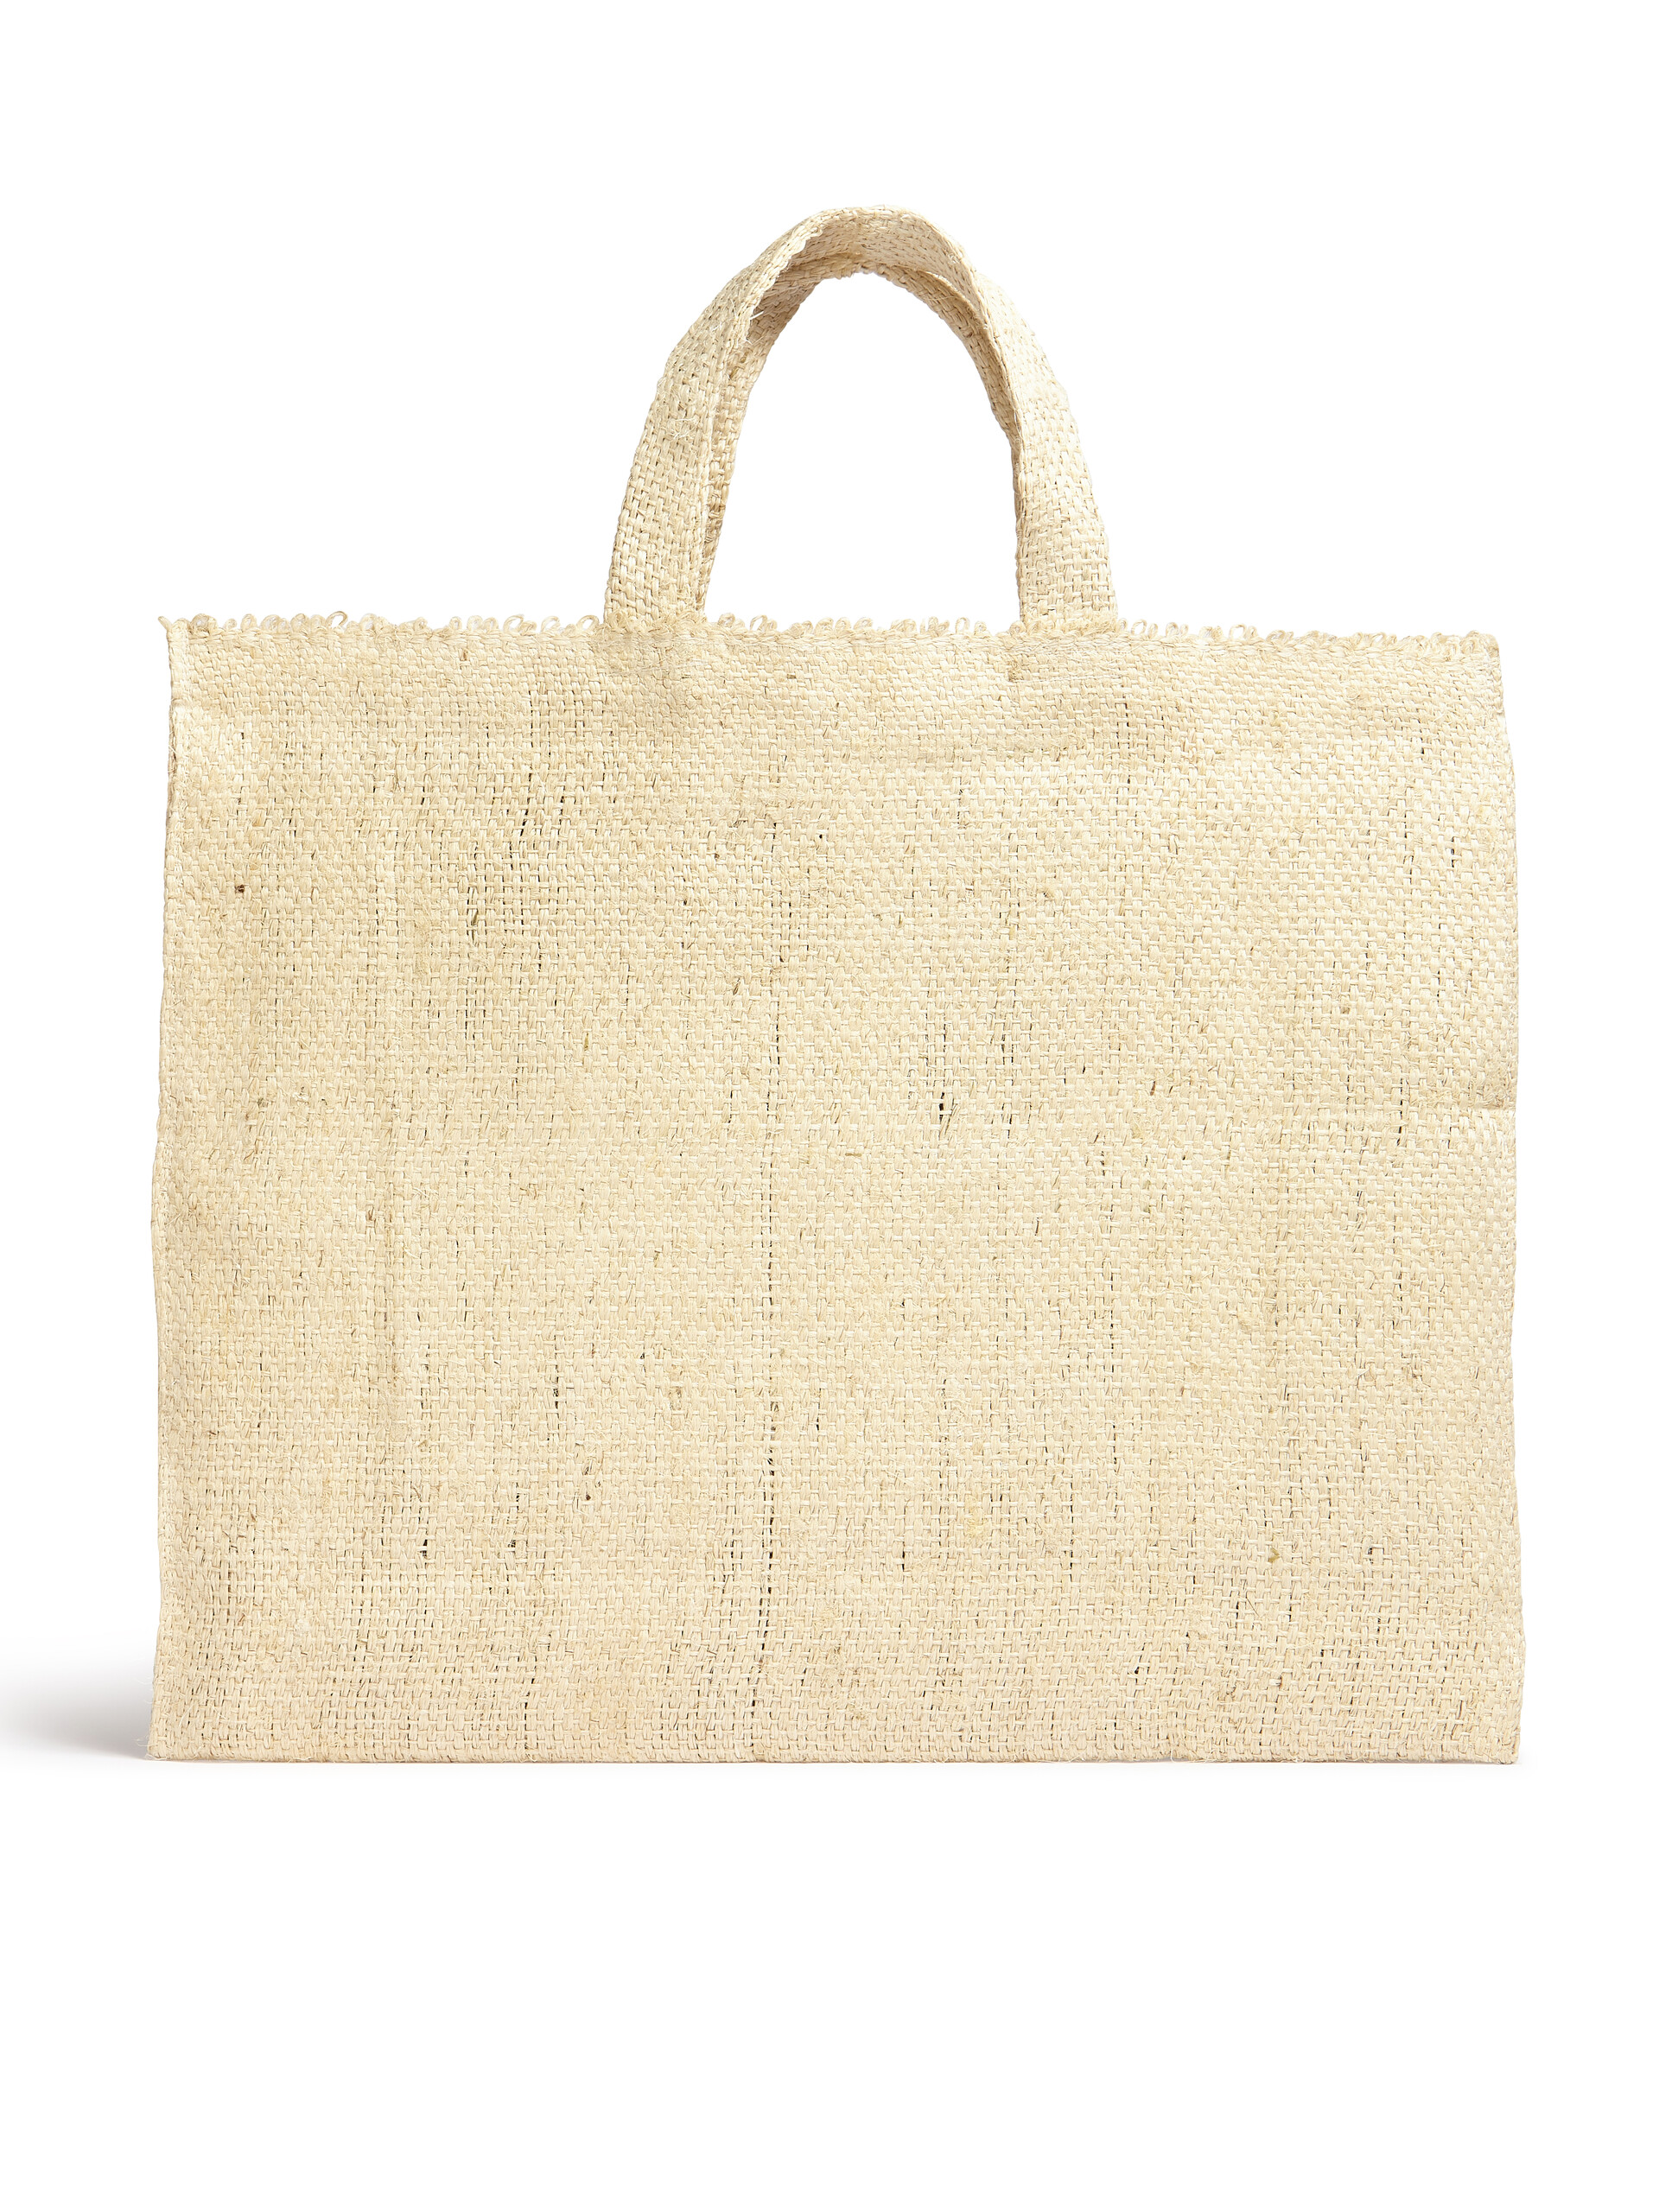 MARNI MARKET CANAPA large bag in red natural fiber - Shopping Bags - Image 3